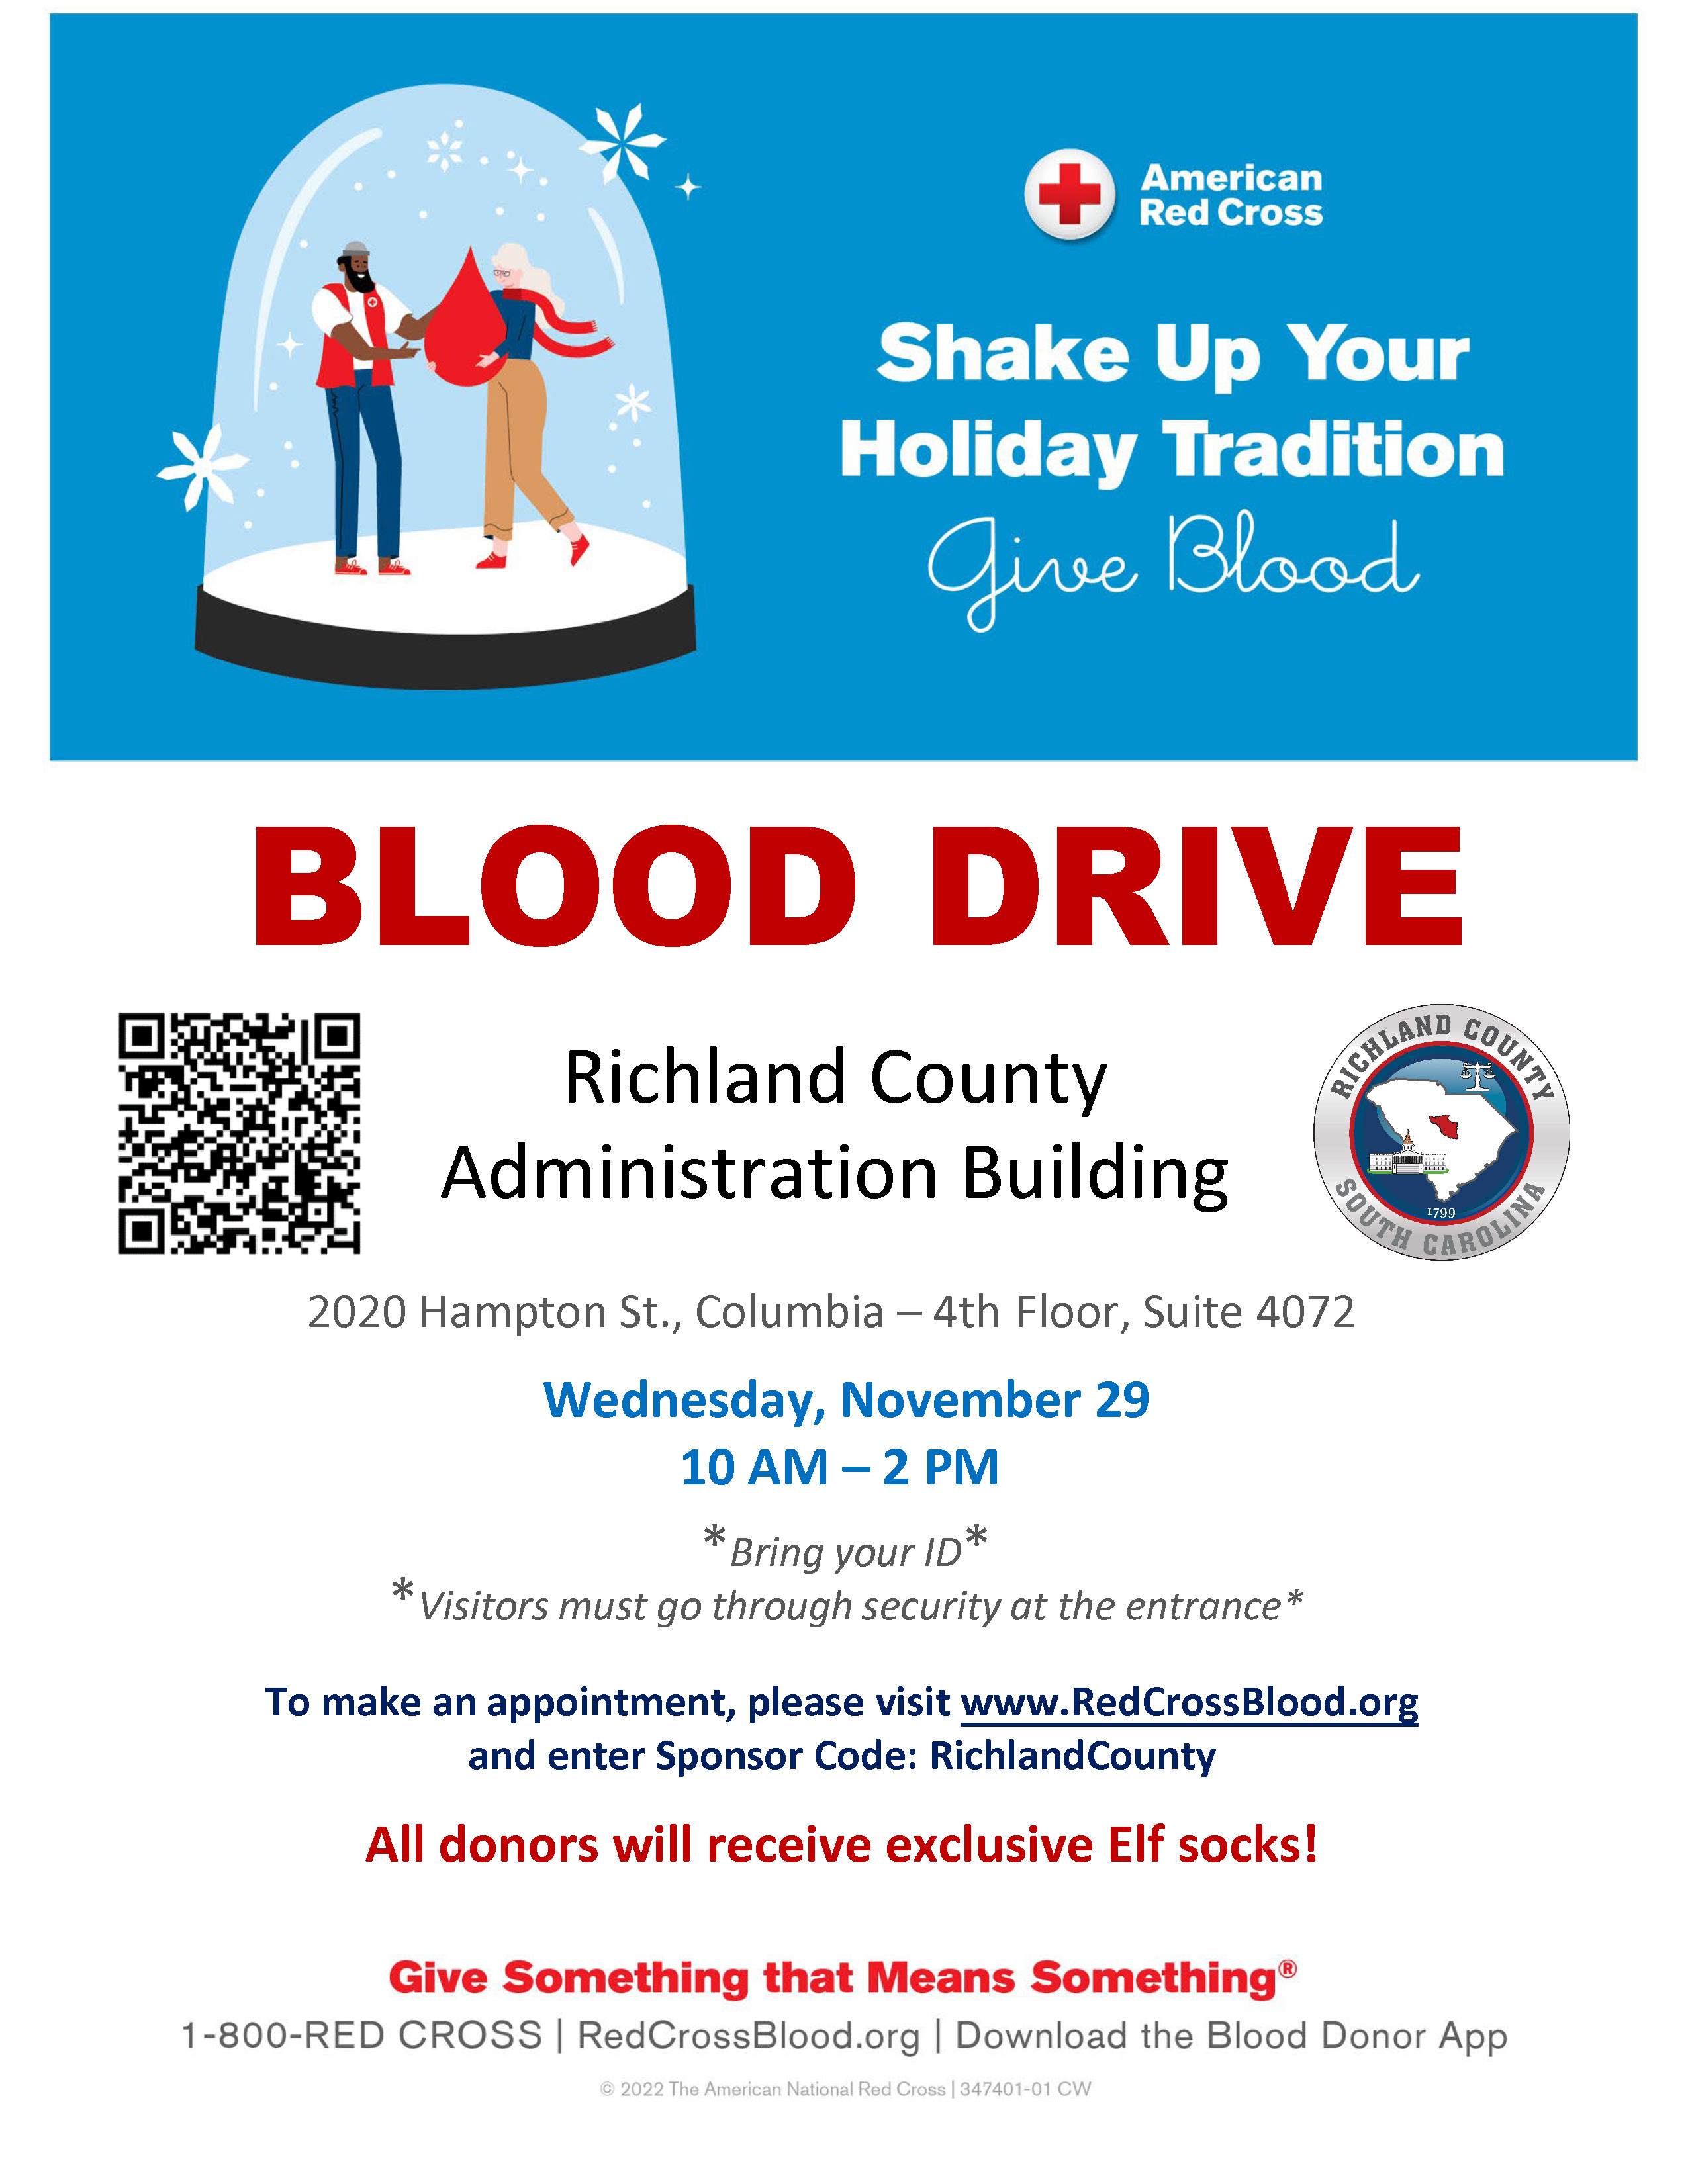 Red Cross Blood Drive - Wednesday, Nov. 29